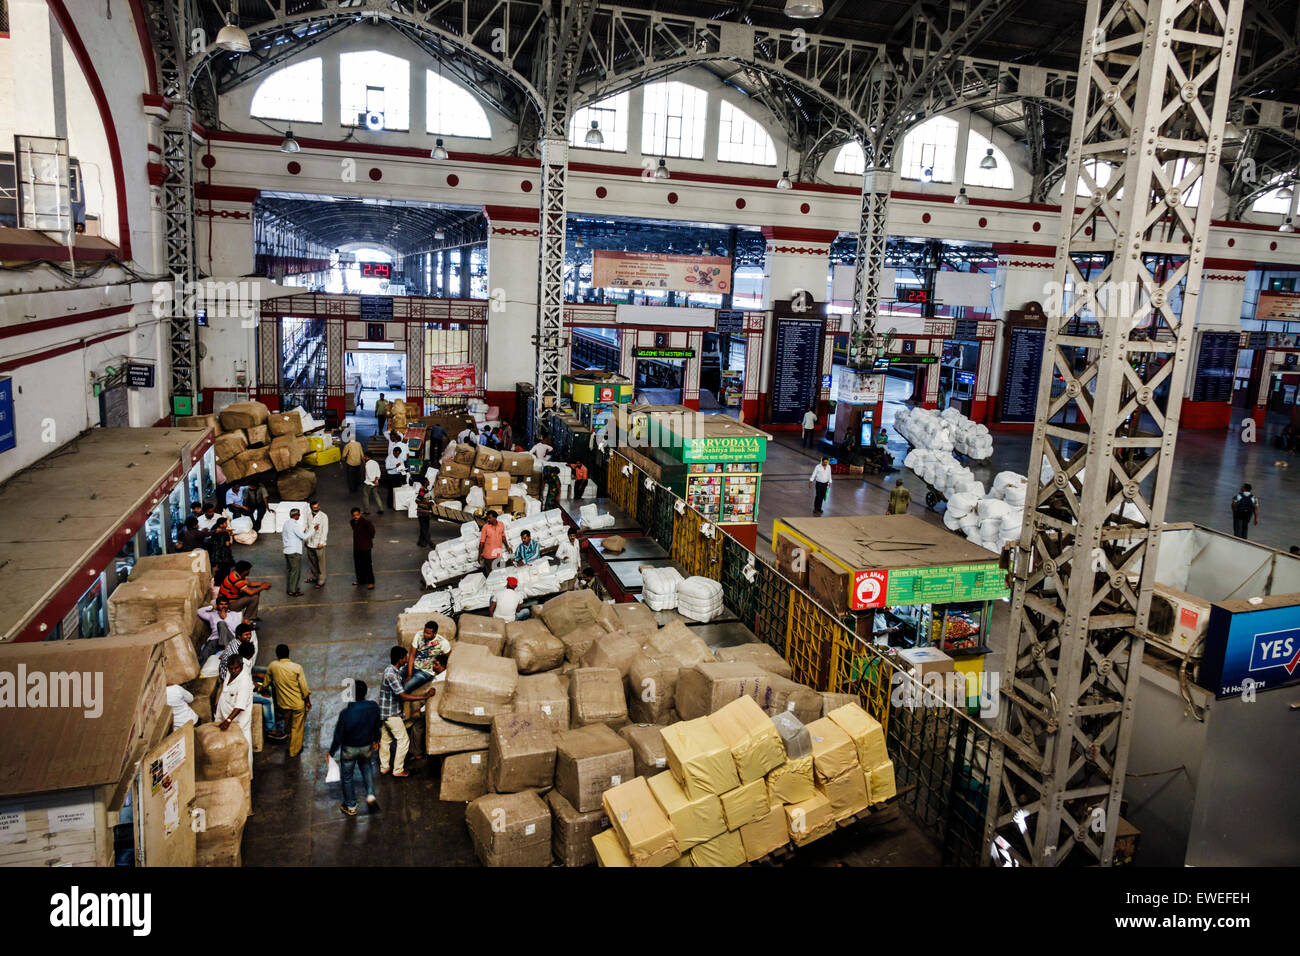 Mumbai India,Mumbai Central Railway Station,train,Western Line,laundry,carts,interior inside,terminal,cargo,boxes,packages,India150303065 Stock Photo